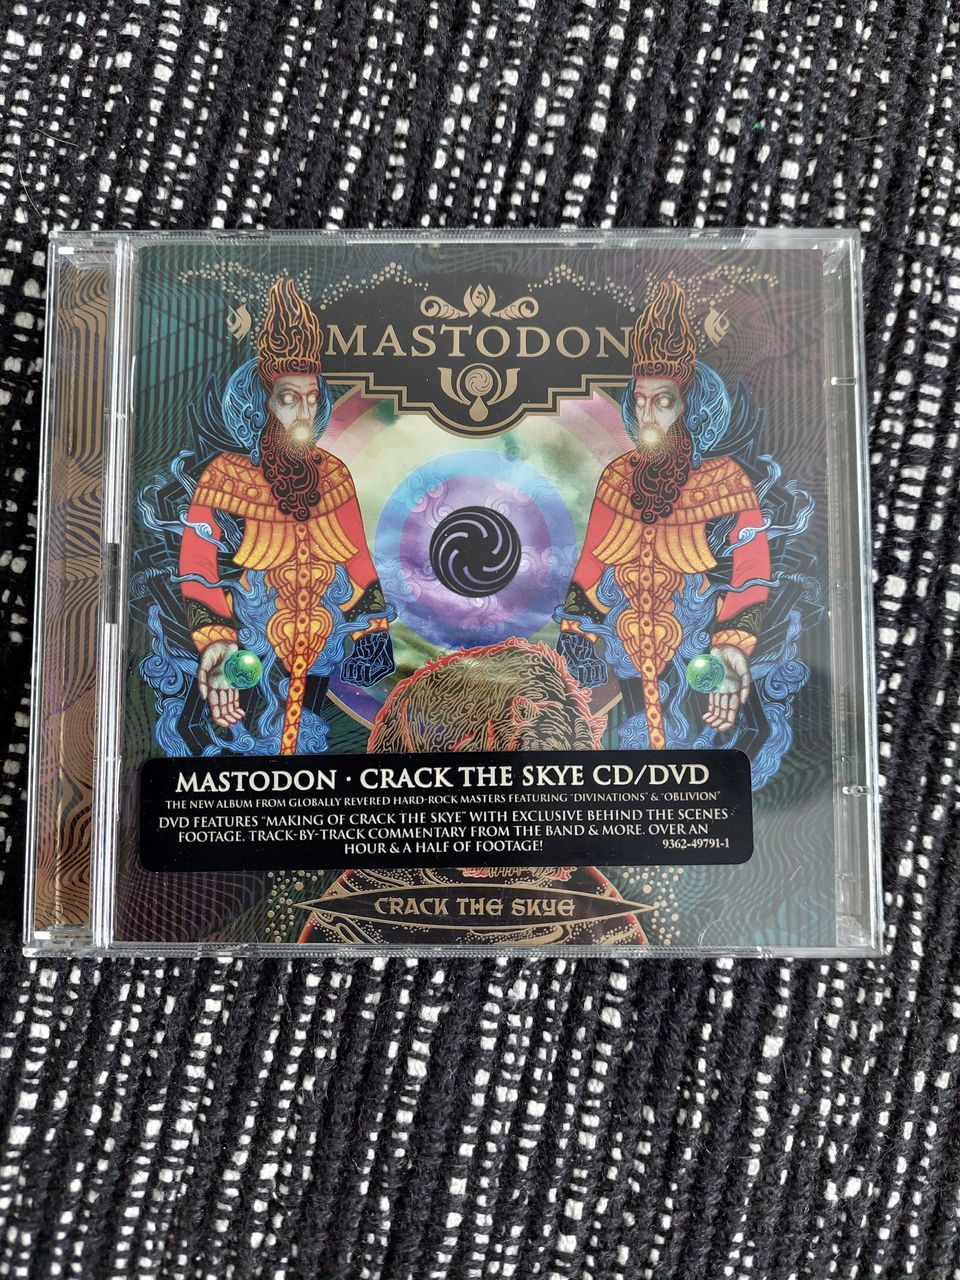 Mastodon Crack the Skye CD/DVD